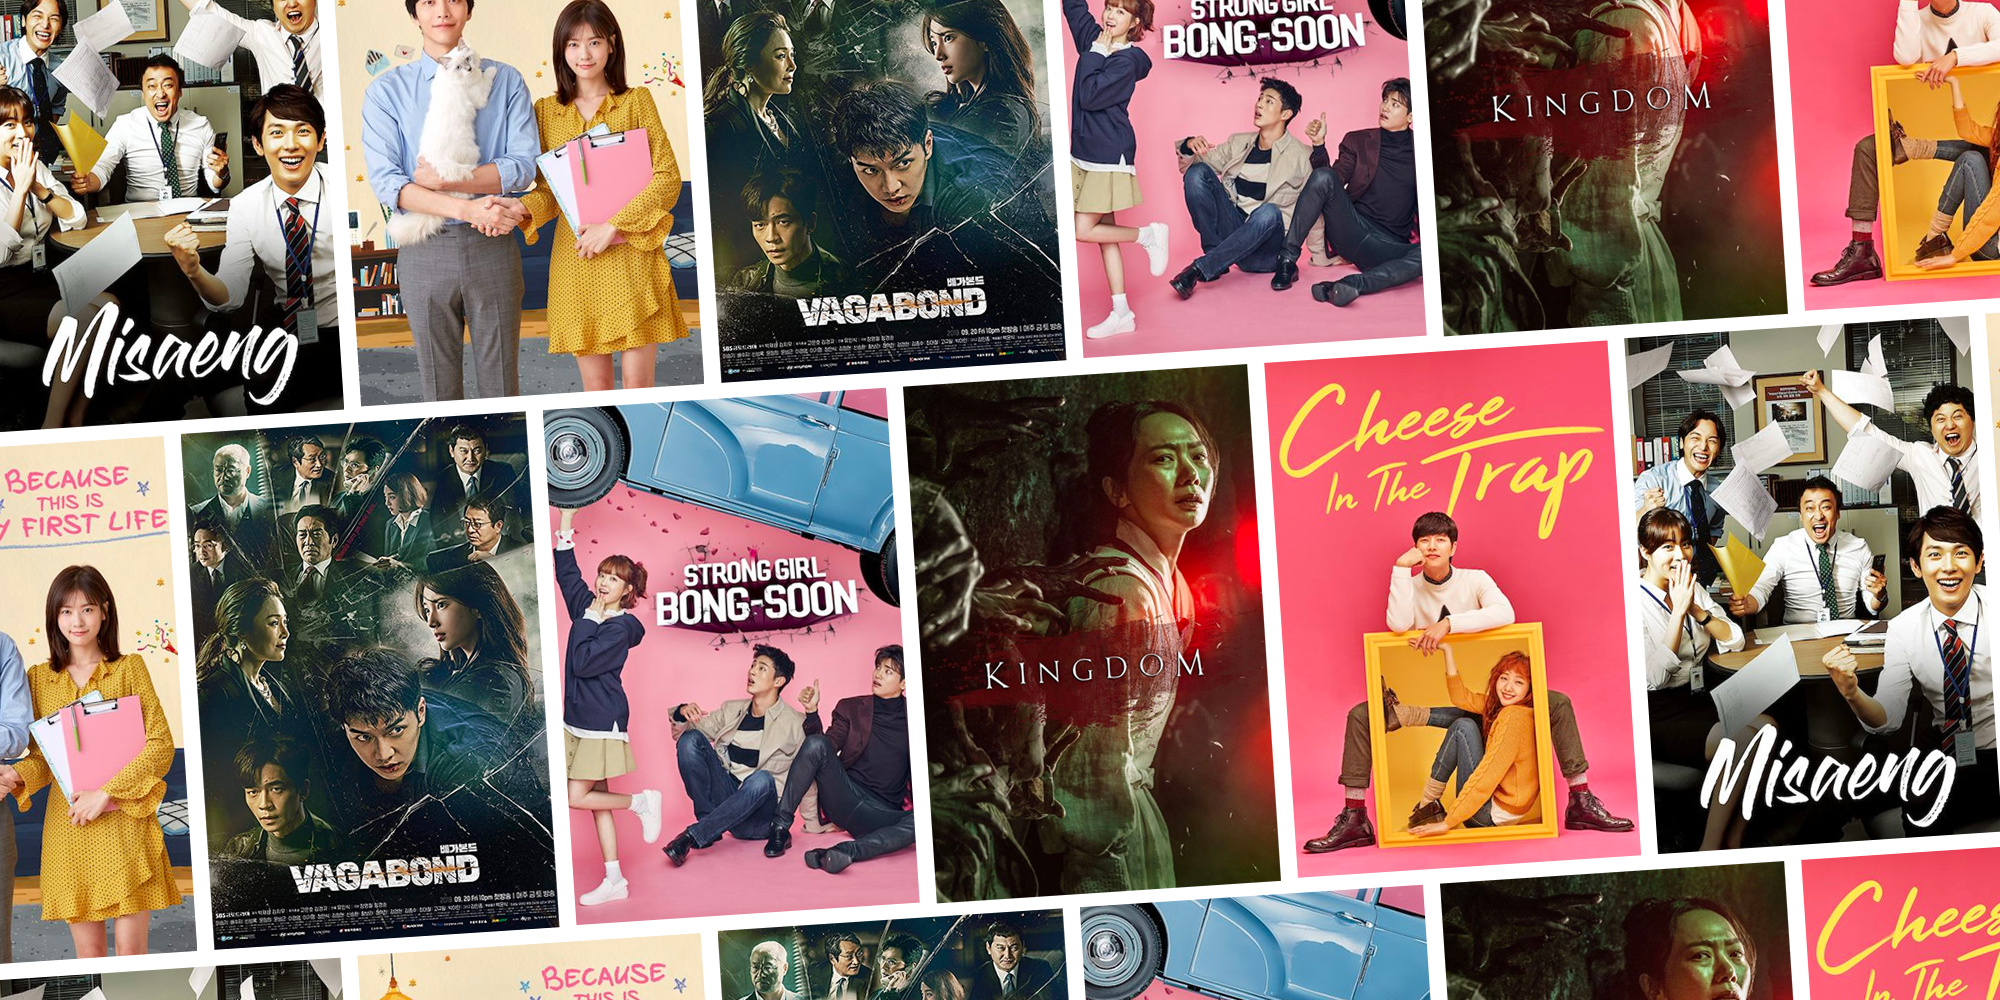 free websites watch korean movies and drama no download